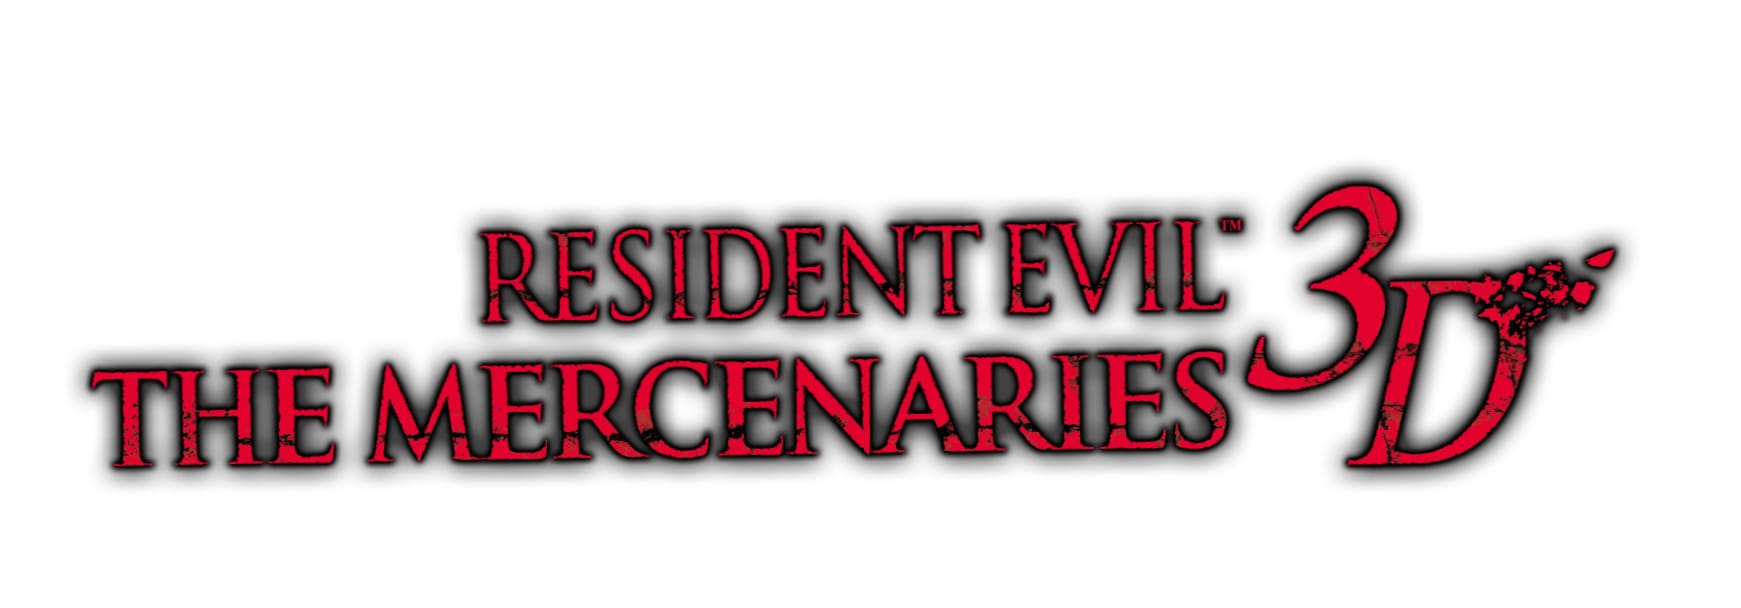 Resident Evil The Mercenaries 3D at 1024 x 1024 iPad size wallpapers HD quality